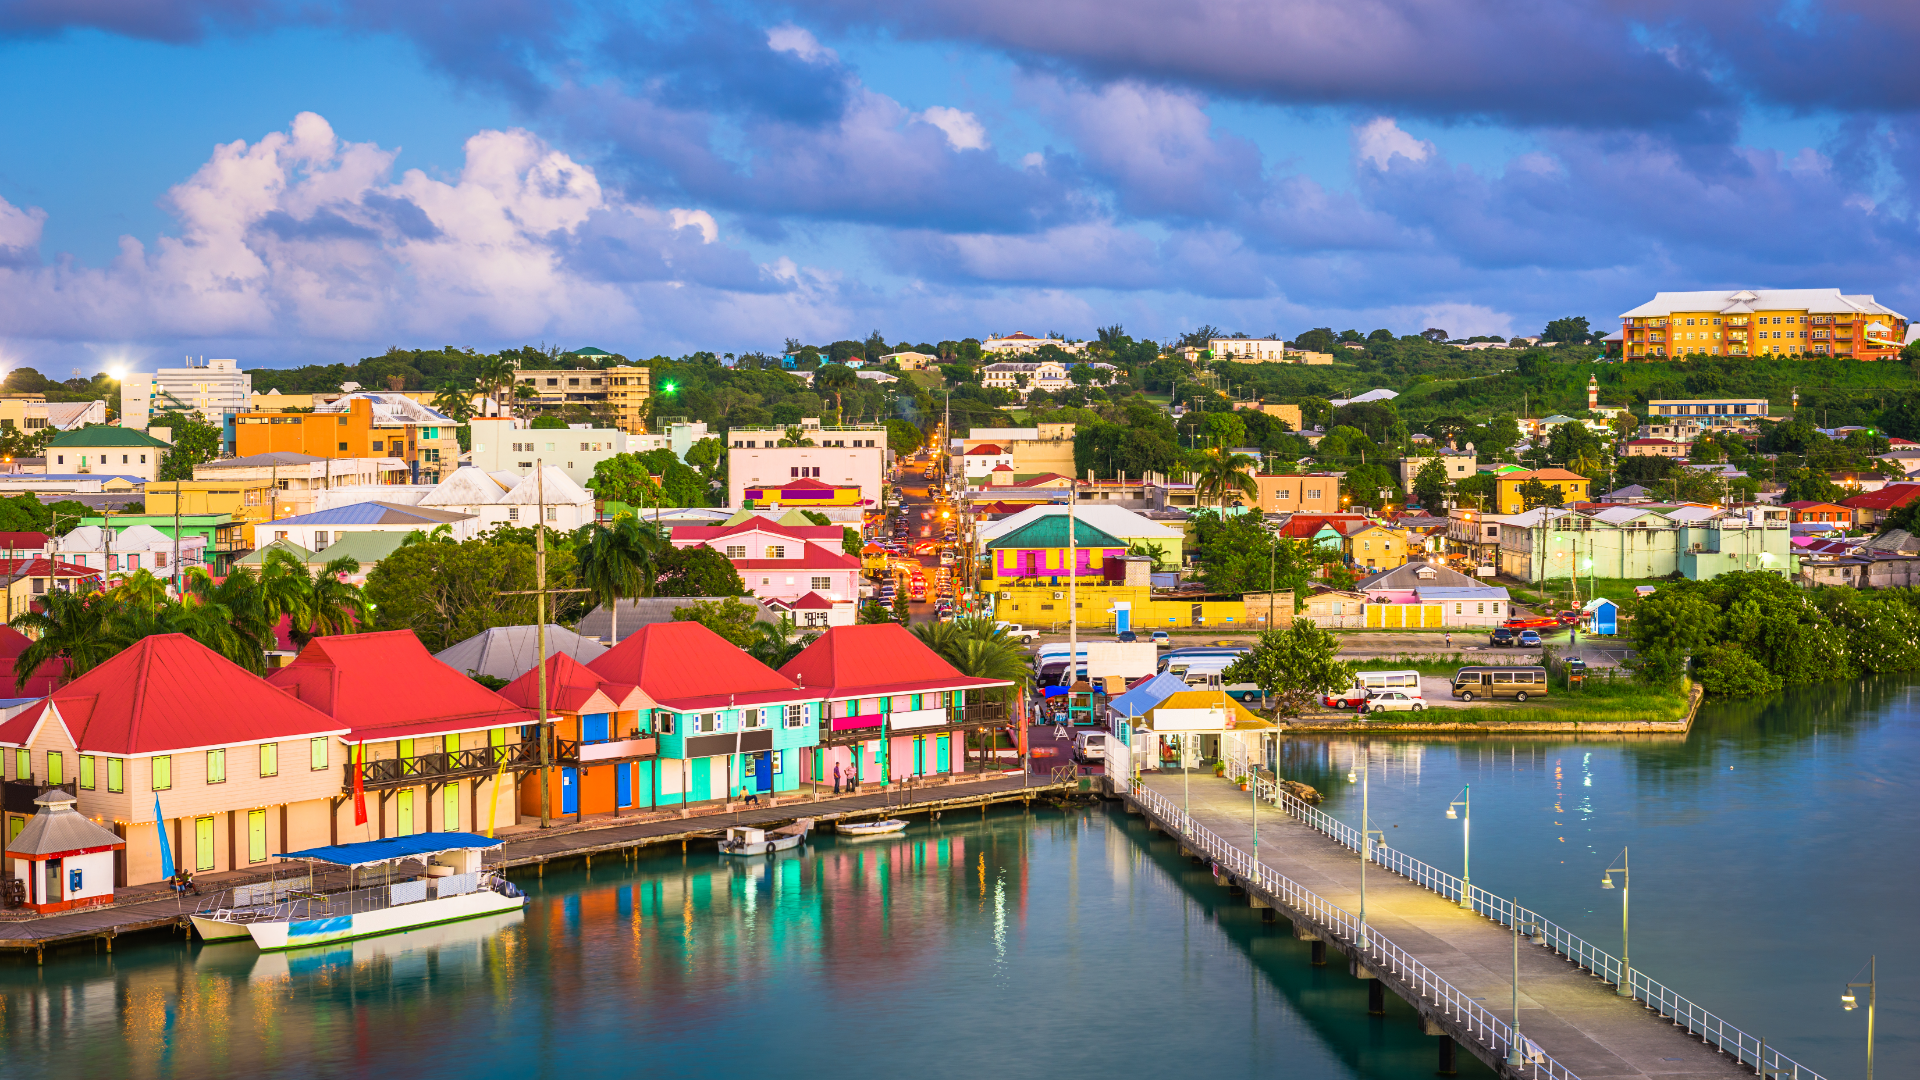 St. Johns Antigua